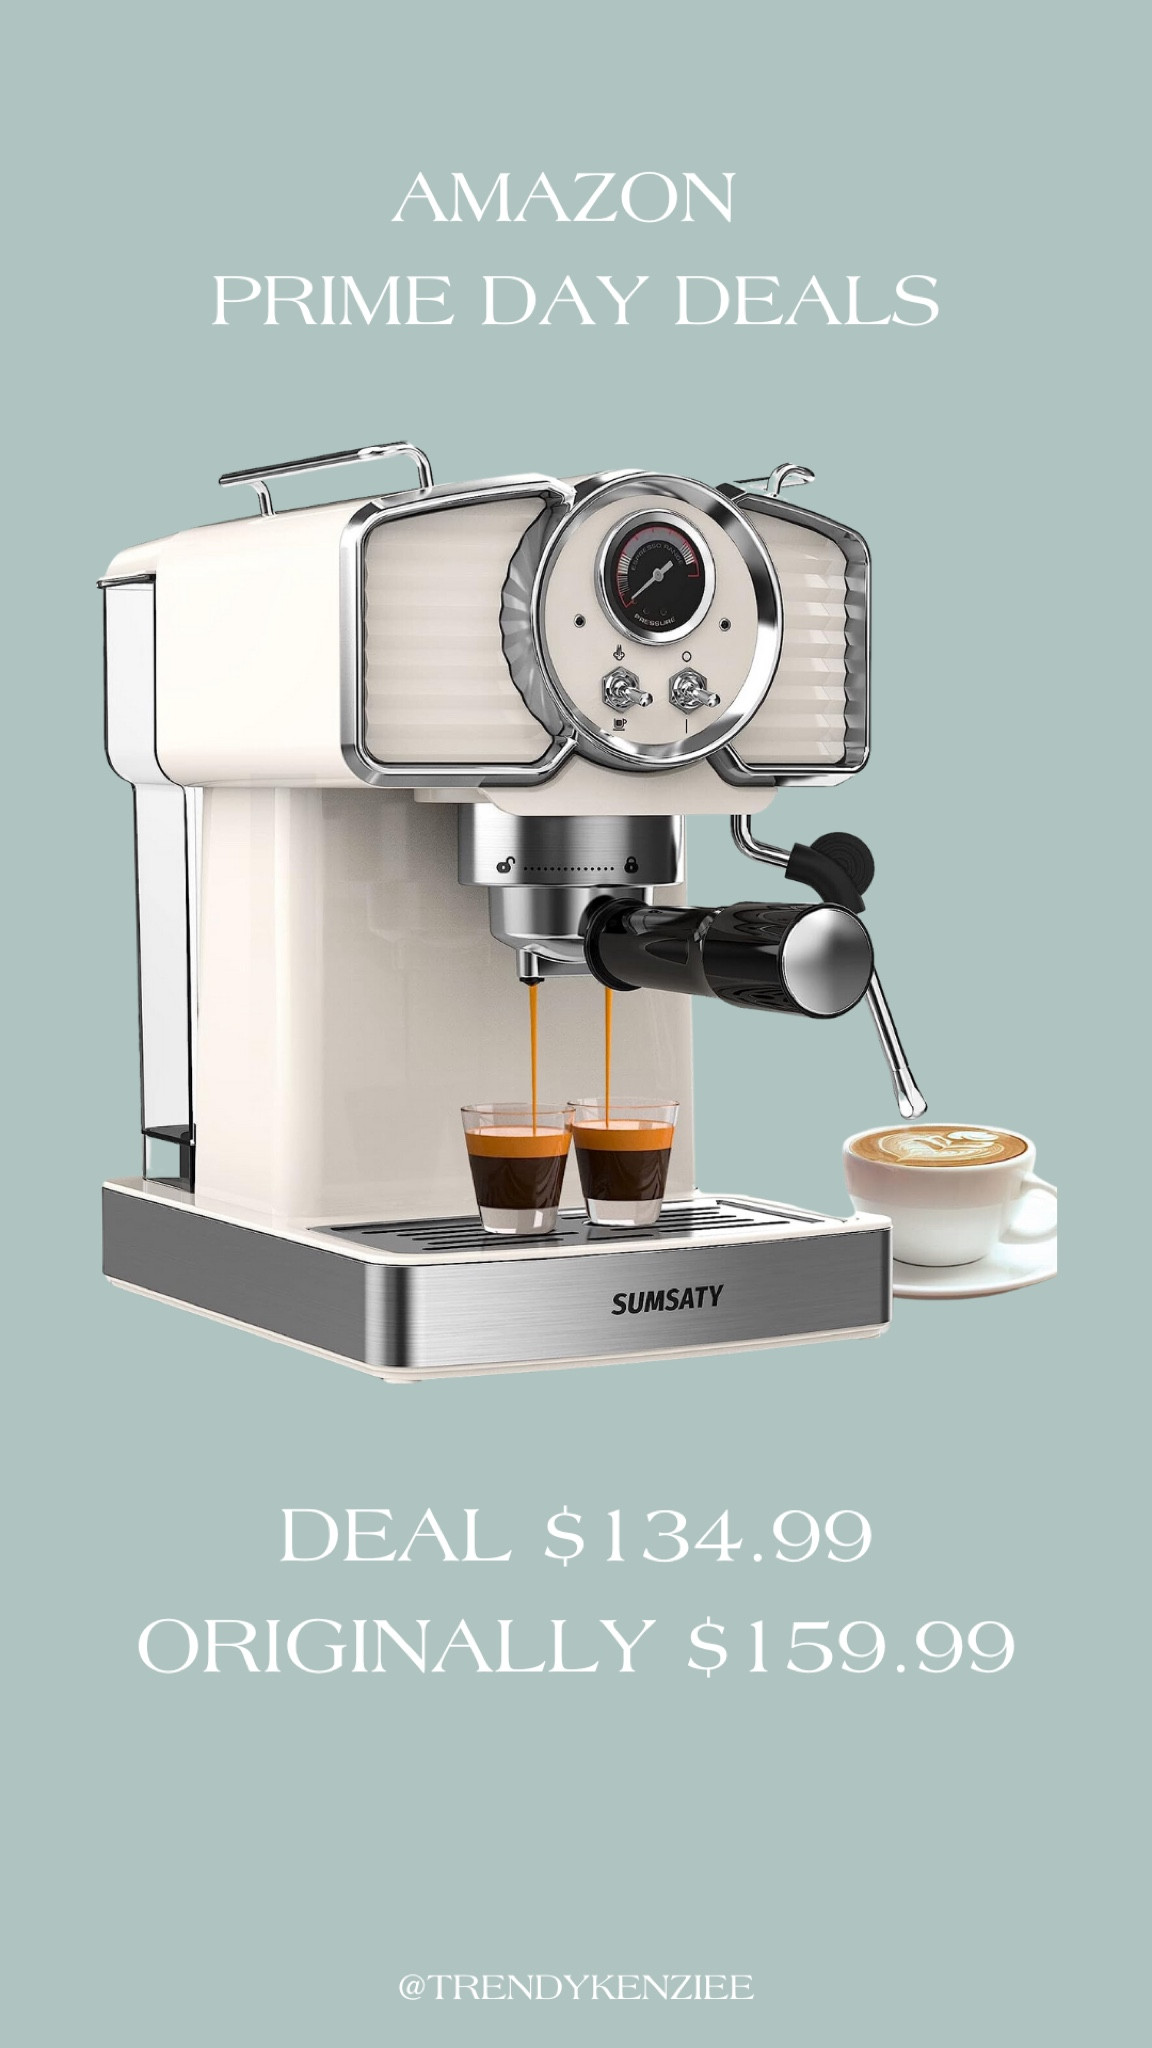 SUMSATY Espresso Coffee Machine 20 Bar, Retro Espresso Maker with